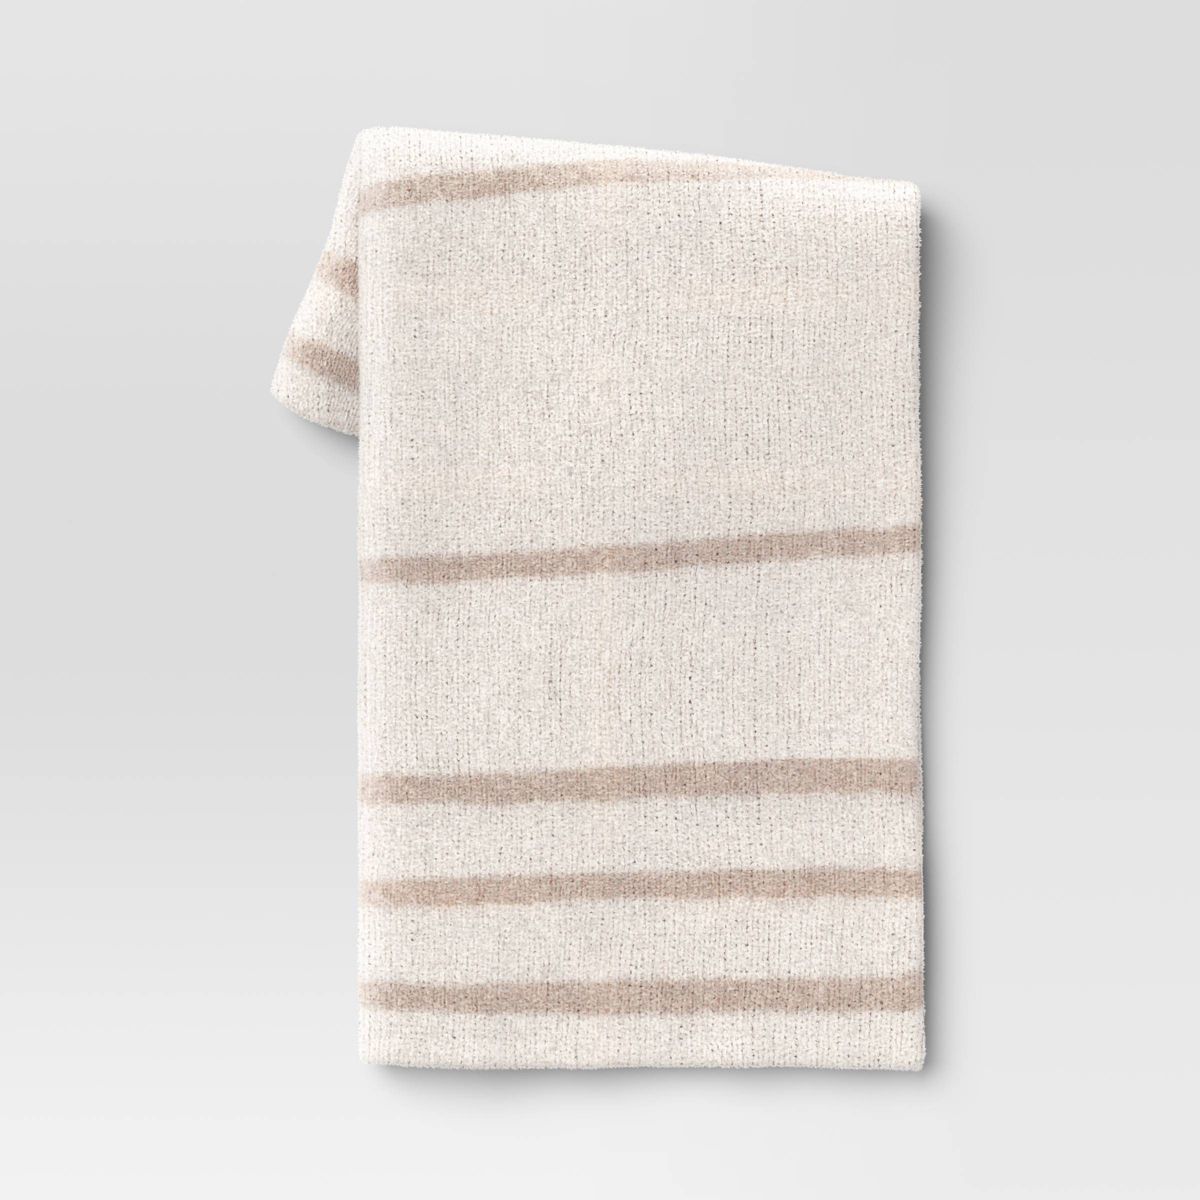 Cozy Feathery Knit Border Striped Throw Blanket  - Threshold™ | Target